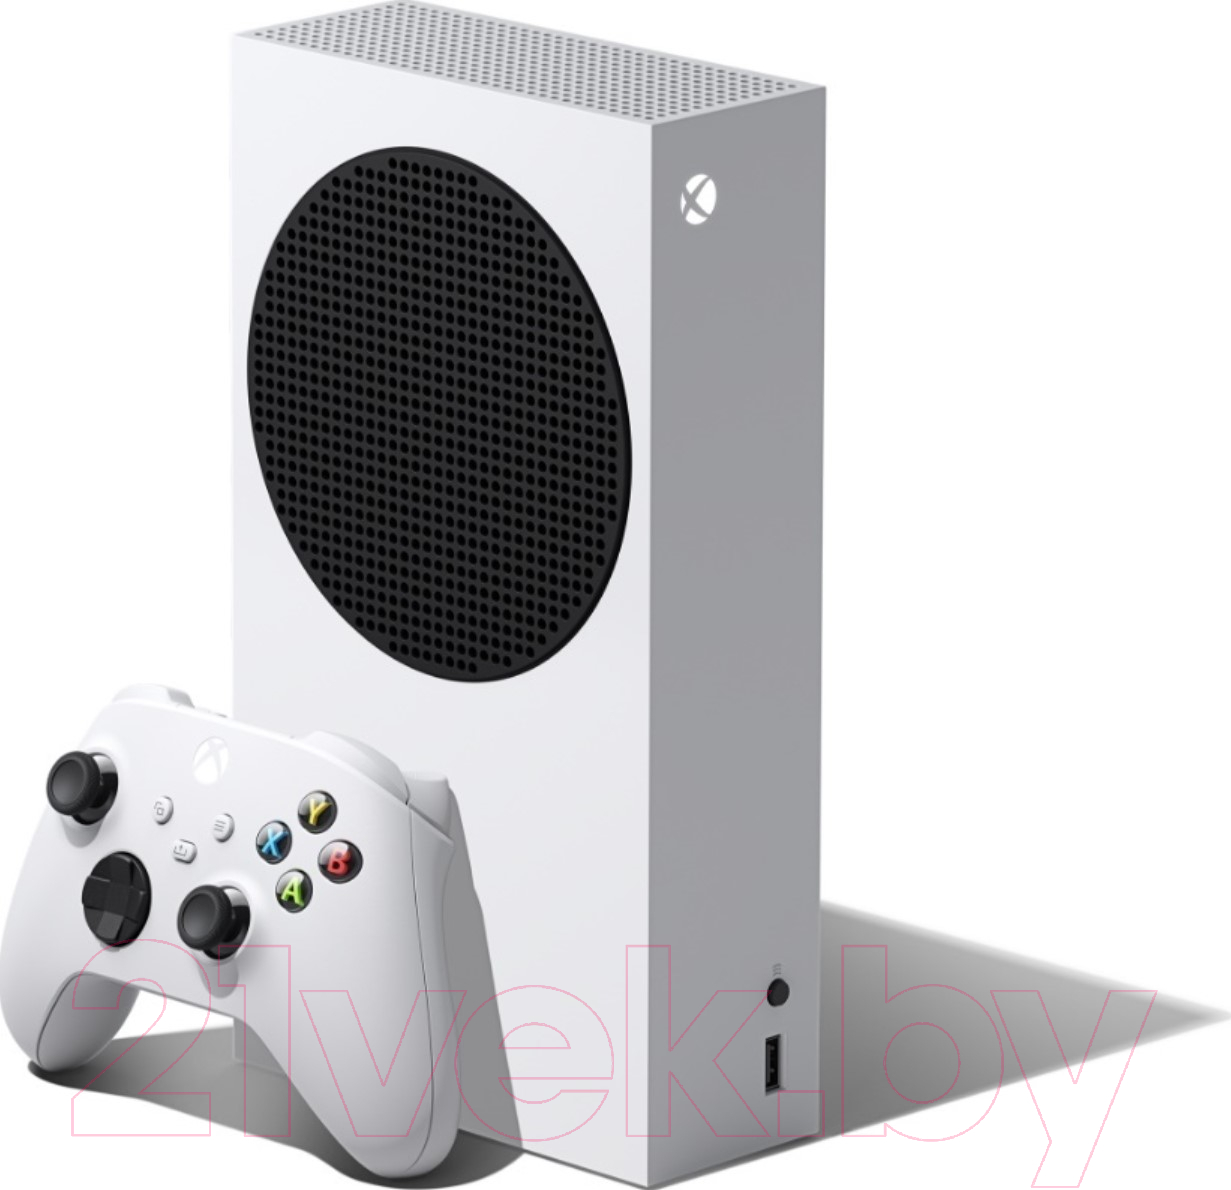 Игровая приставка Microsoft Xbox Series S 512Gb 1883 / RRS-00010